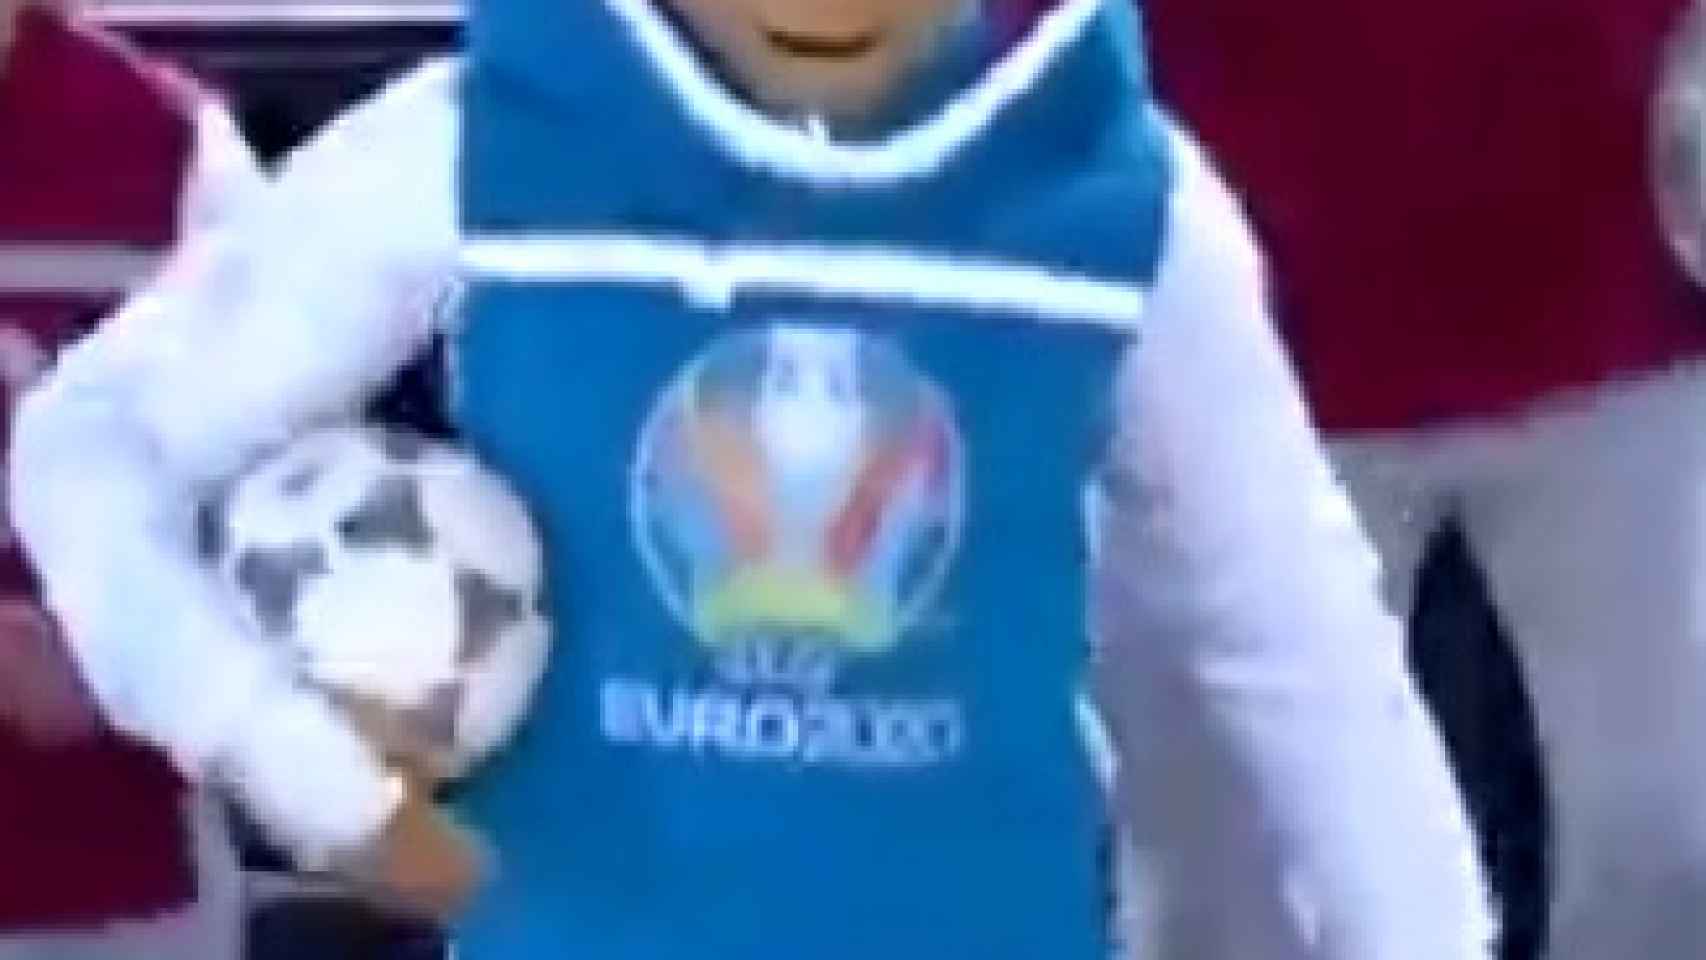 El freestyler 'Skillzy' será la mascota de la Eurocopa 2020